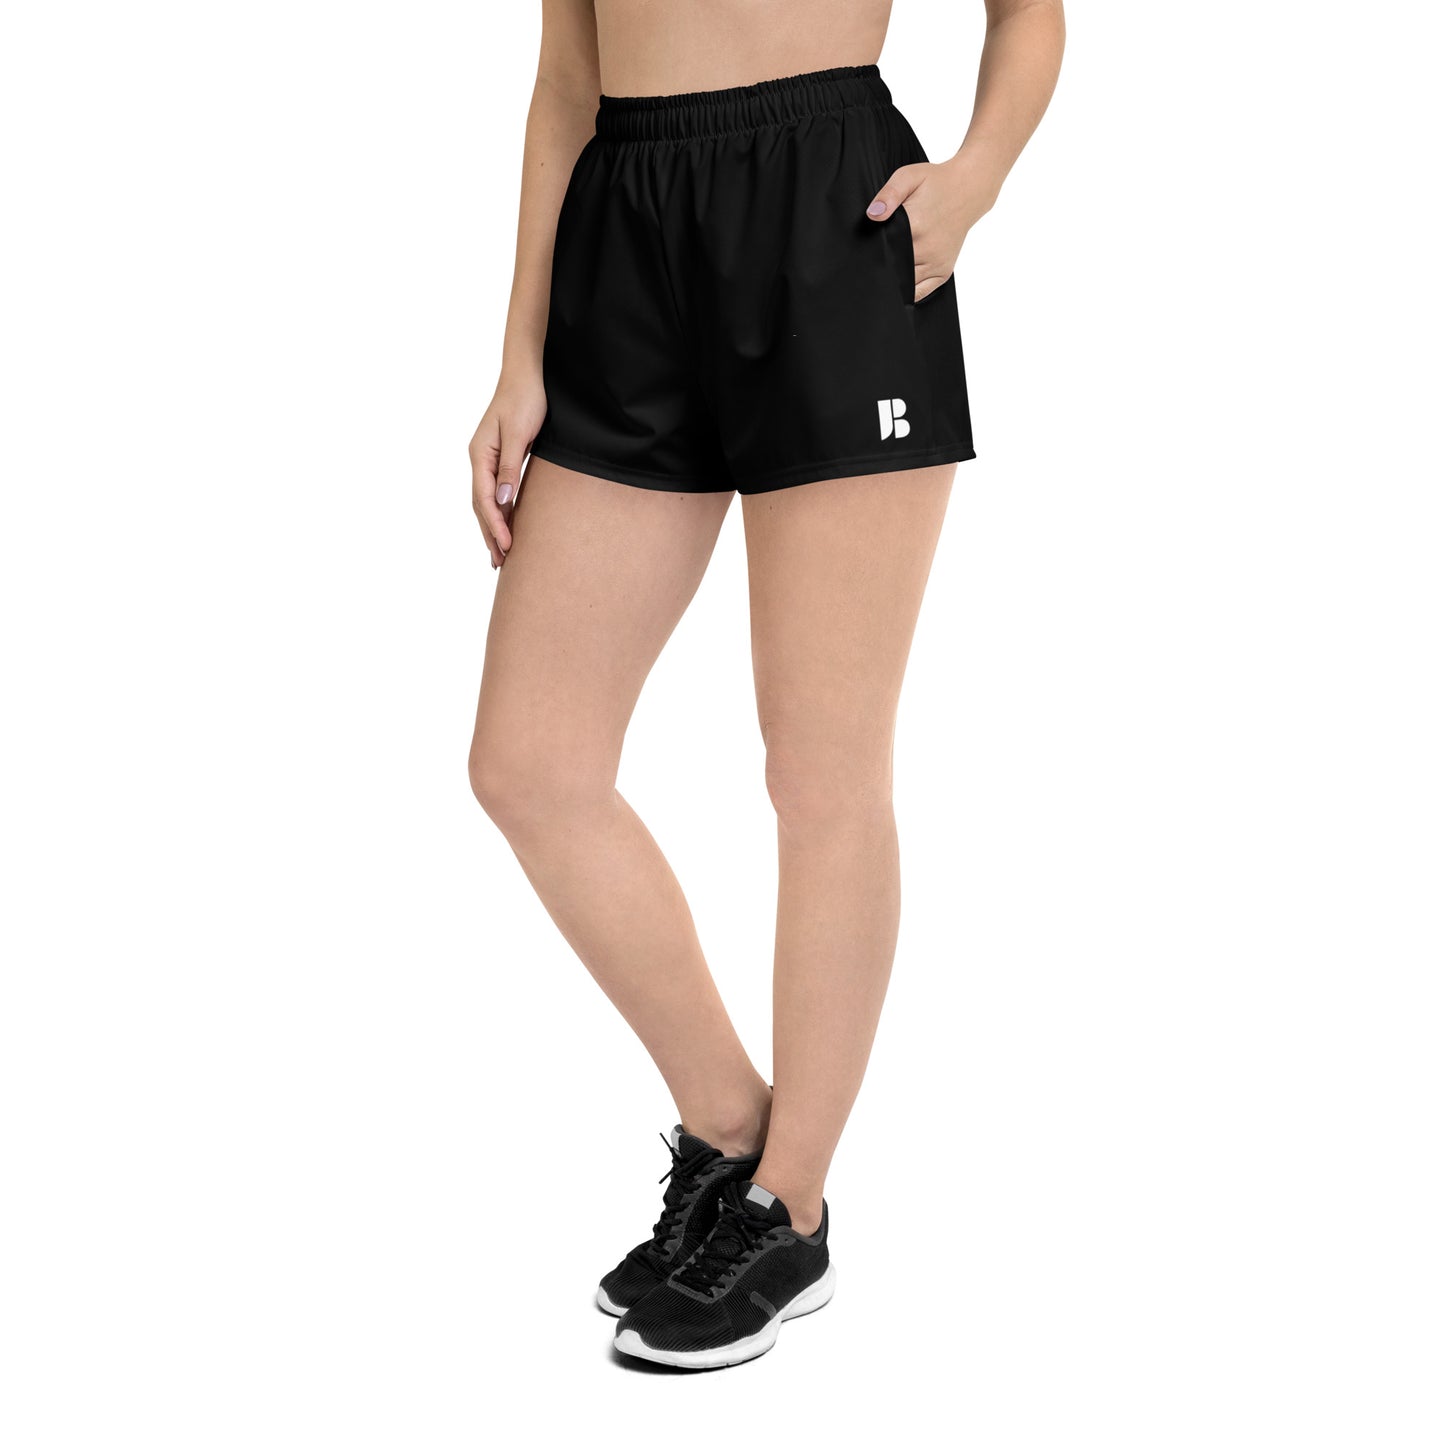 JB Women's Athletic Shorts – Jared and Britt